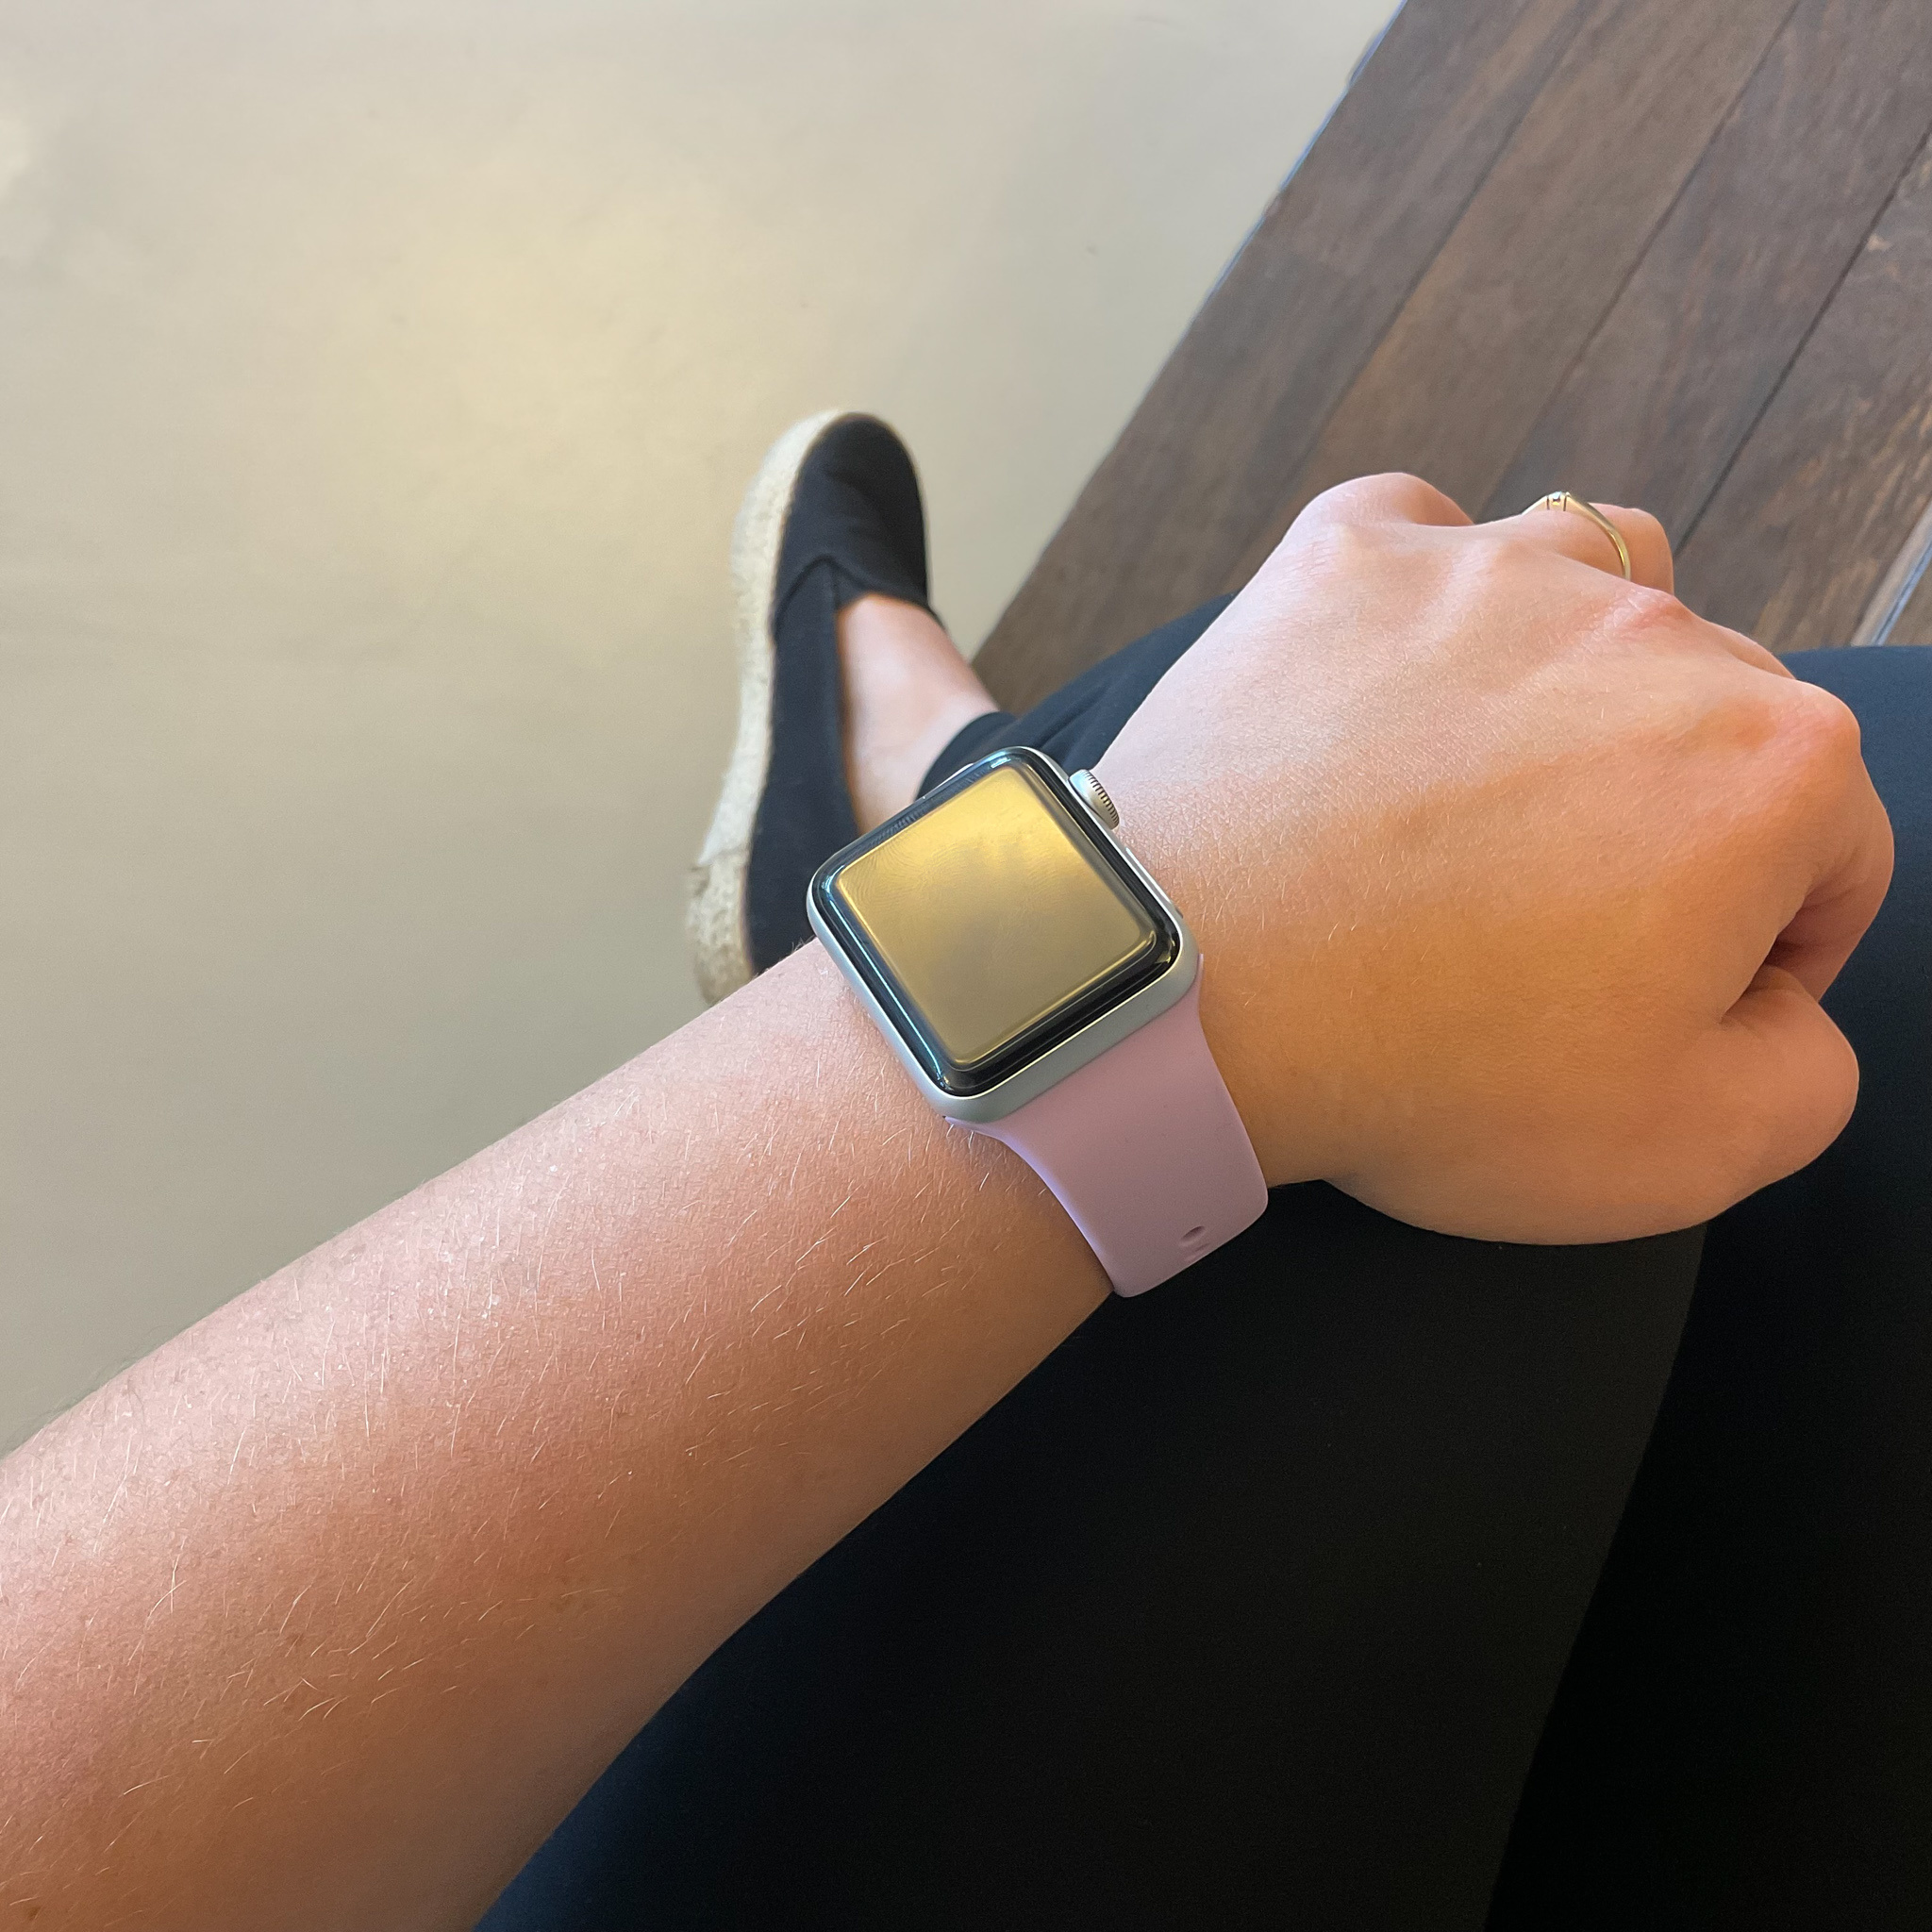 Cinturino sport per Apple Watch - viola chiaro